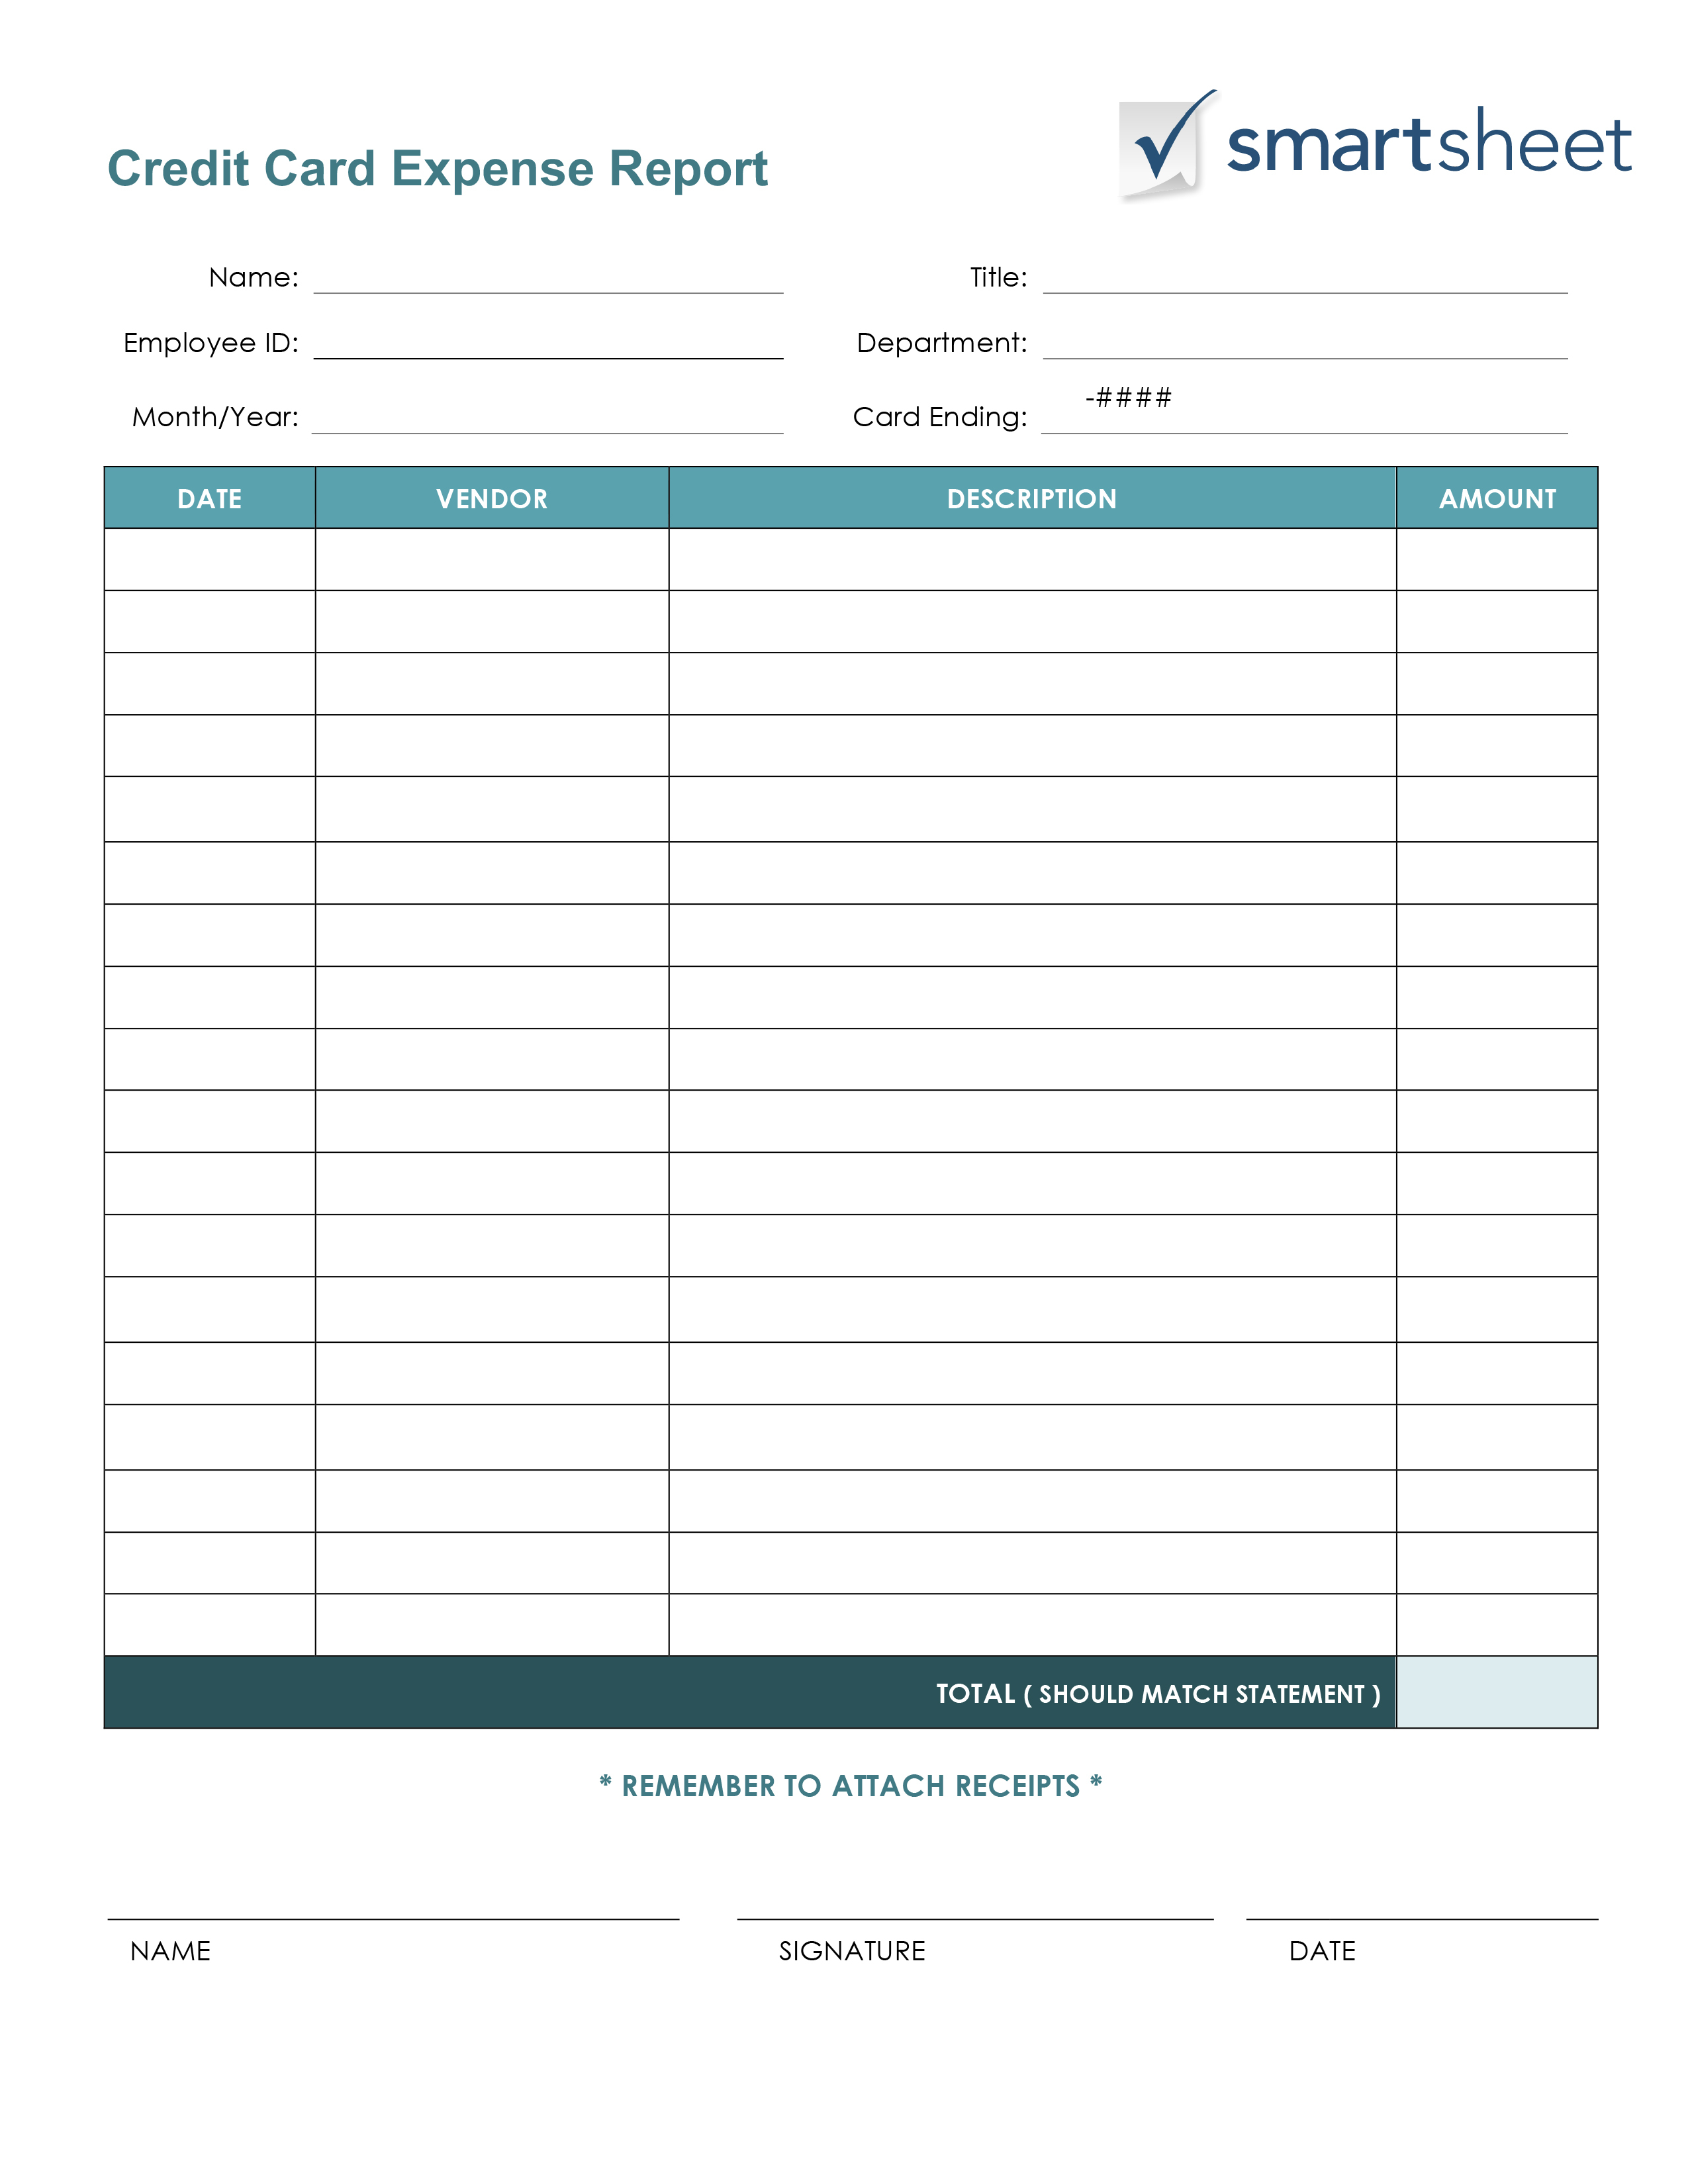 Free Expense Report Templates Smartsheet To Monthly Business Expense Report Template